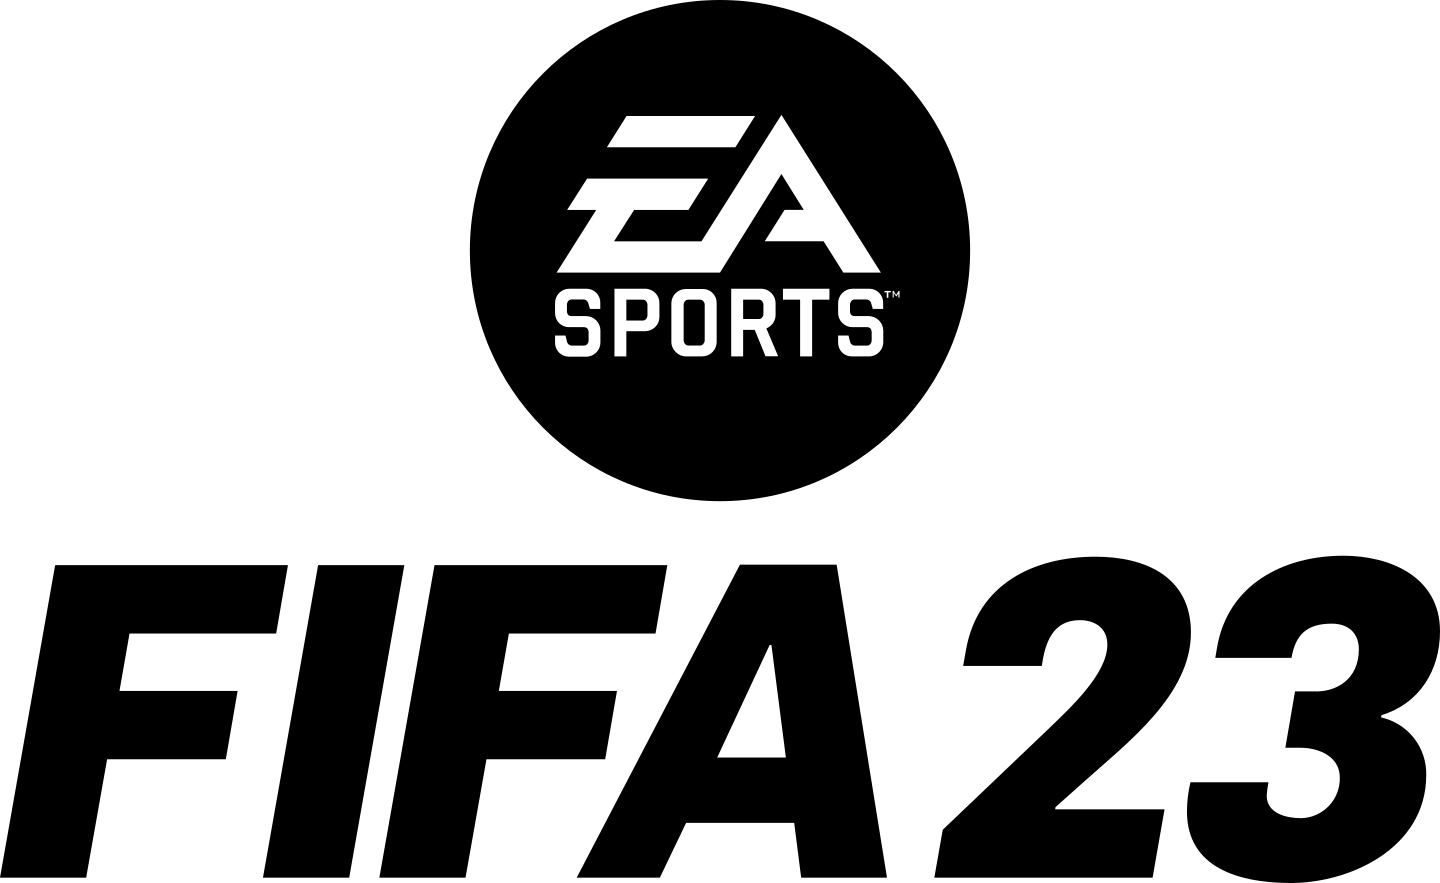 fifa23 logo 3 - FIFA 23 Logo